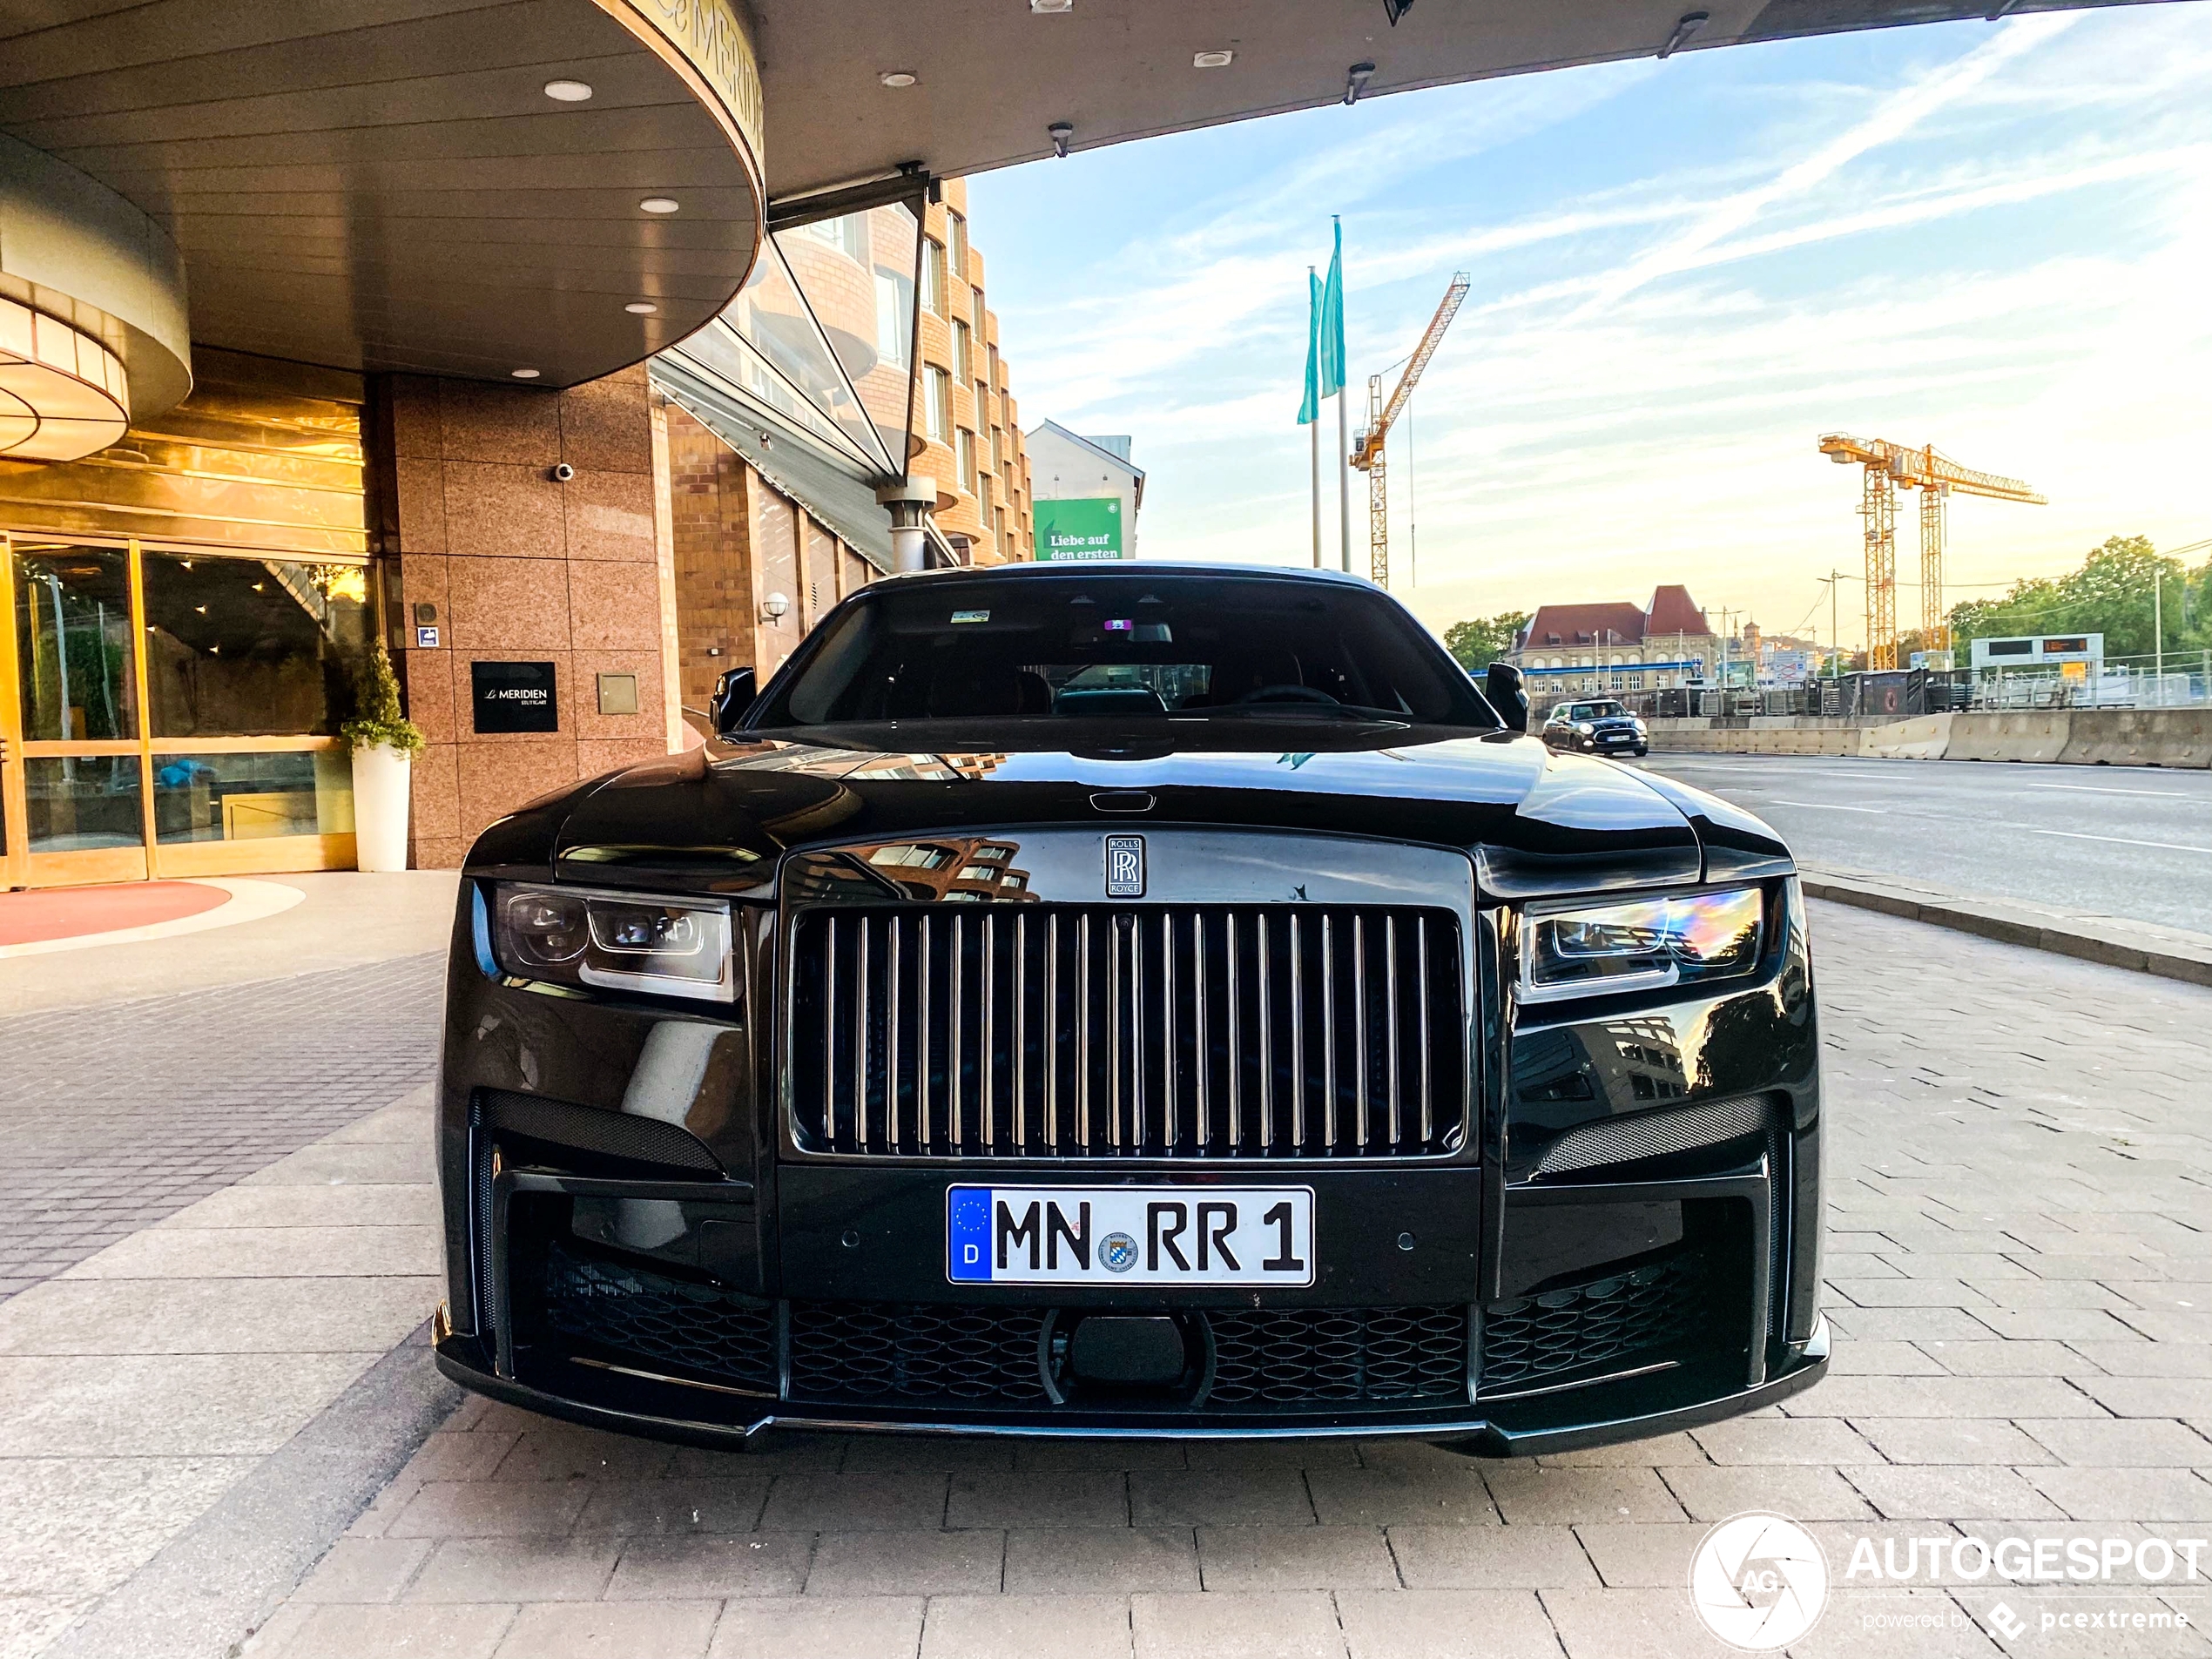 Rolls-Royce Ghost Black Badge 2021 Spofec